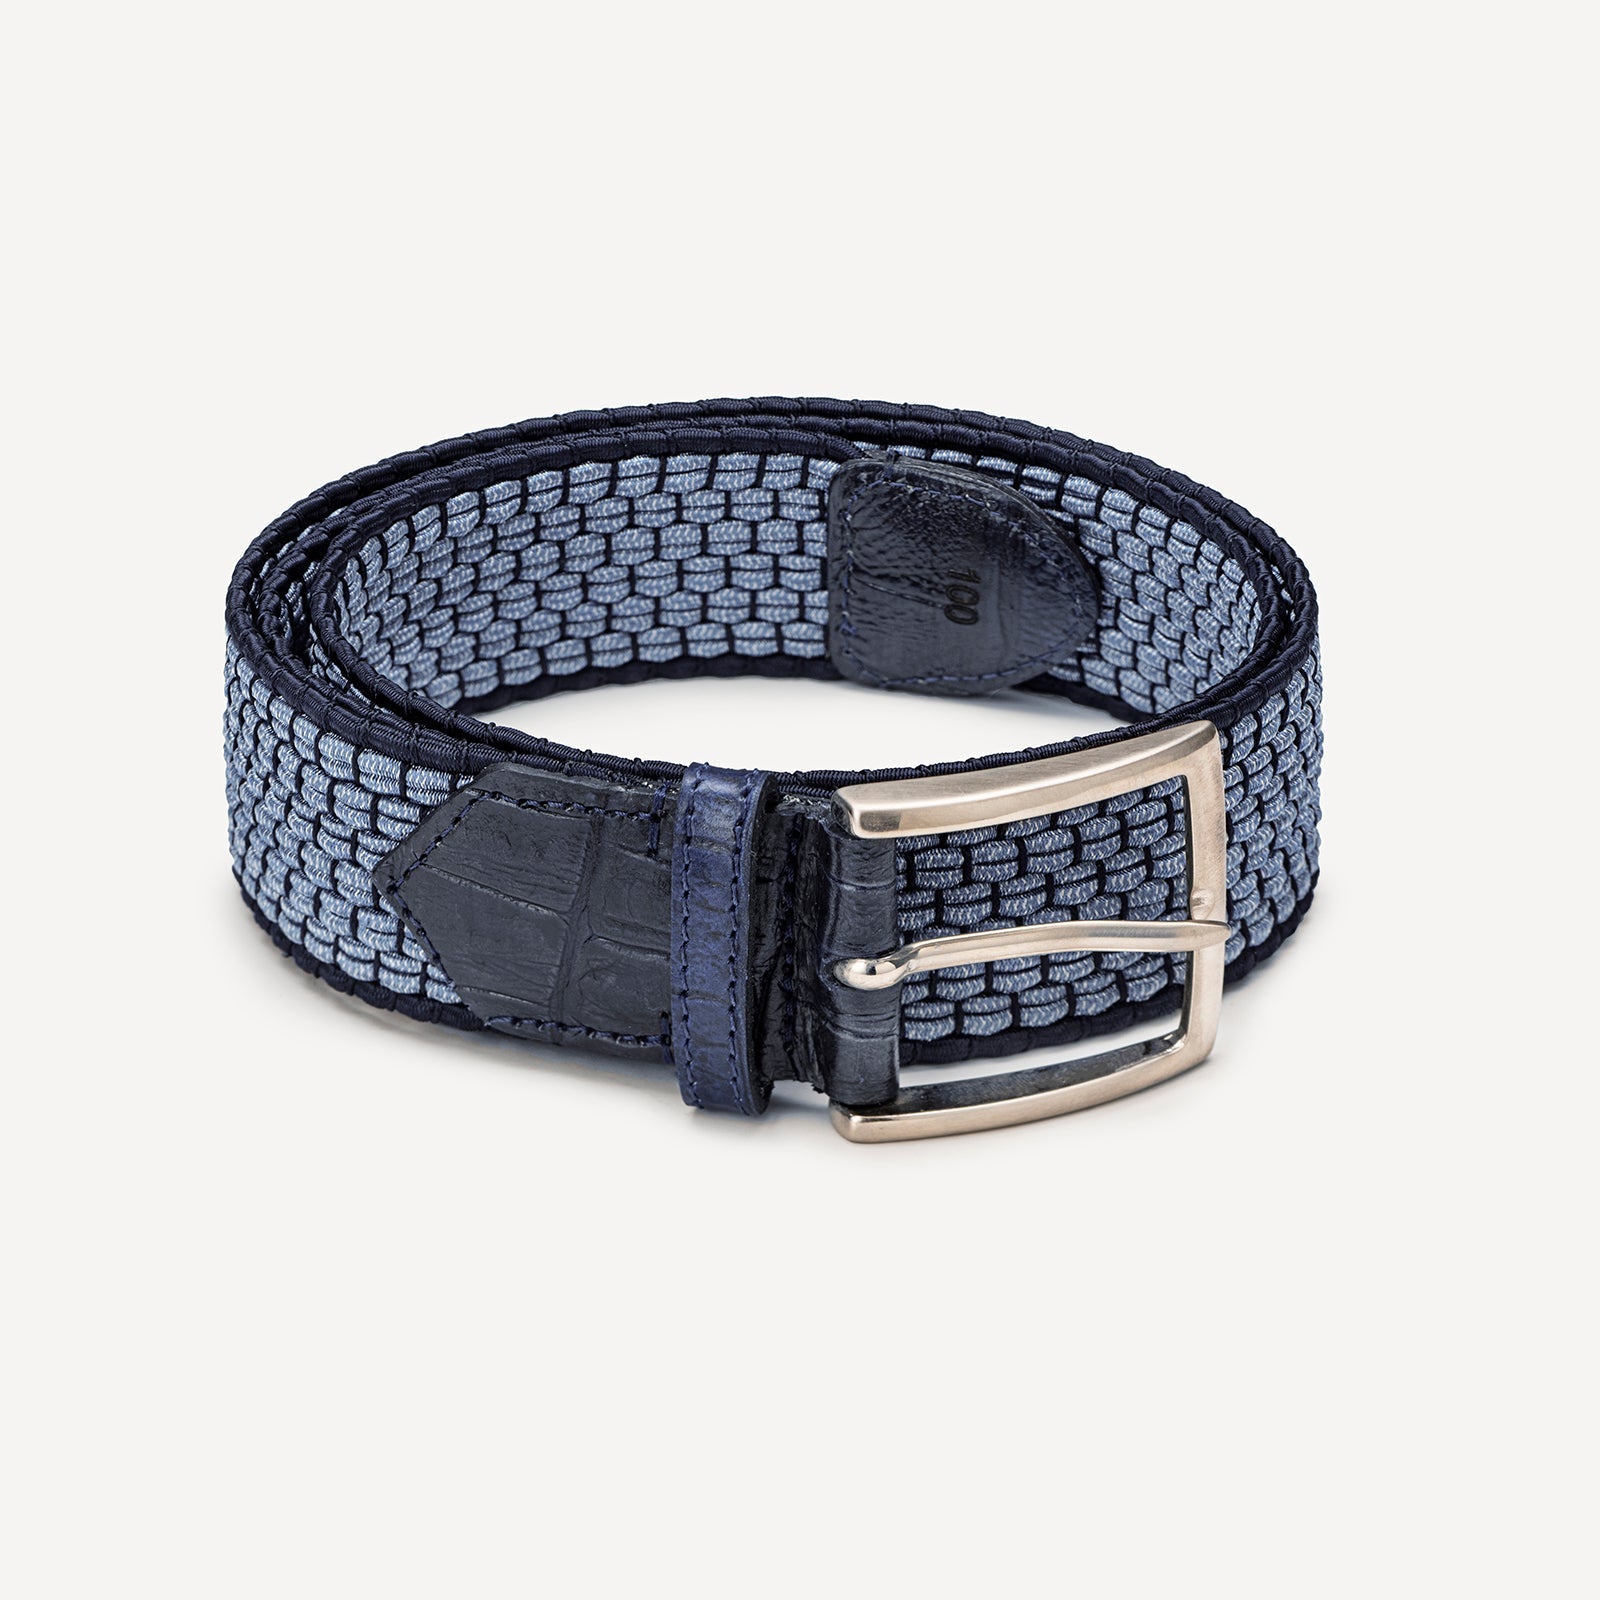 Belt 14/20 bicolor 100% Capri blue and jeans leather belt